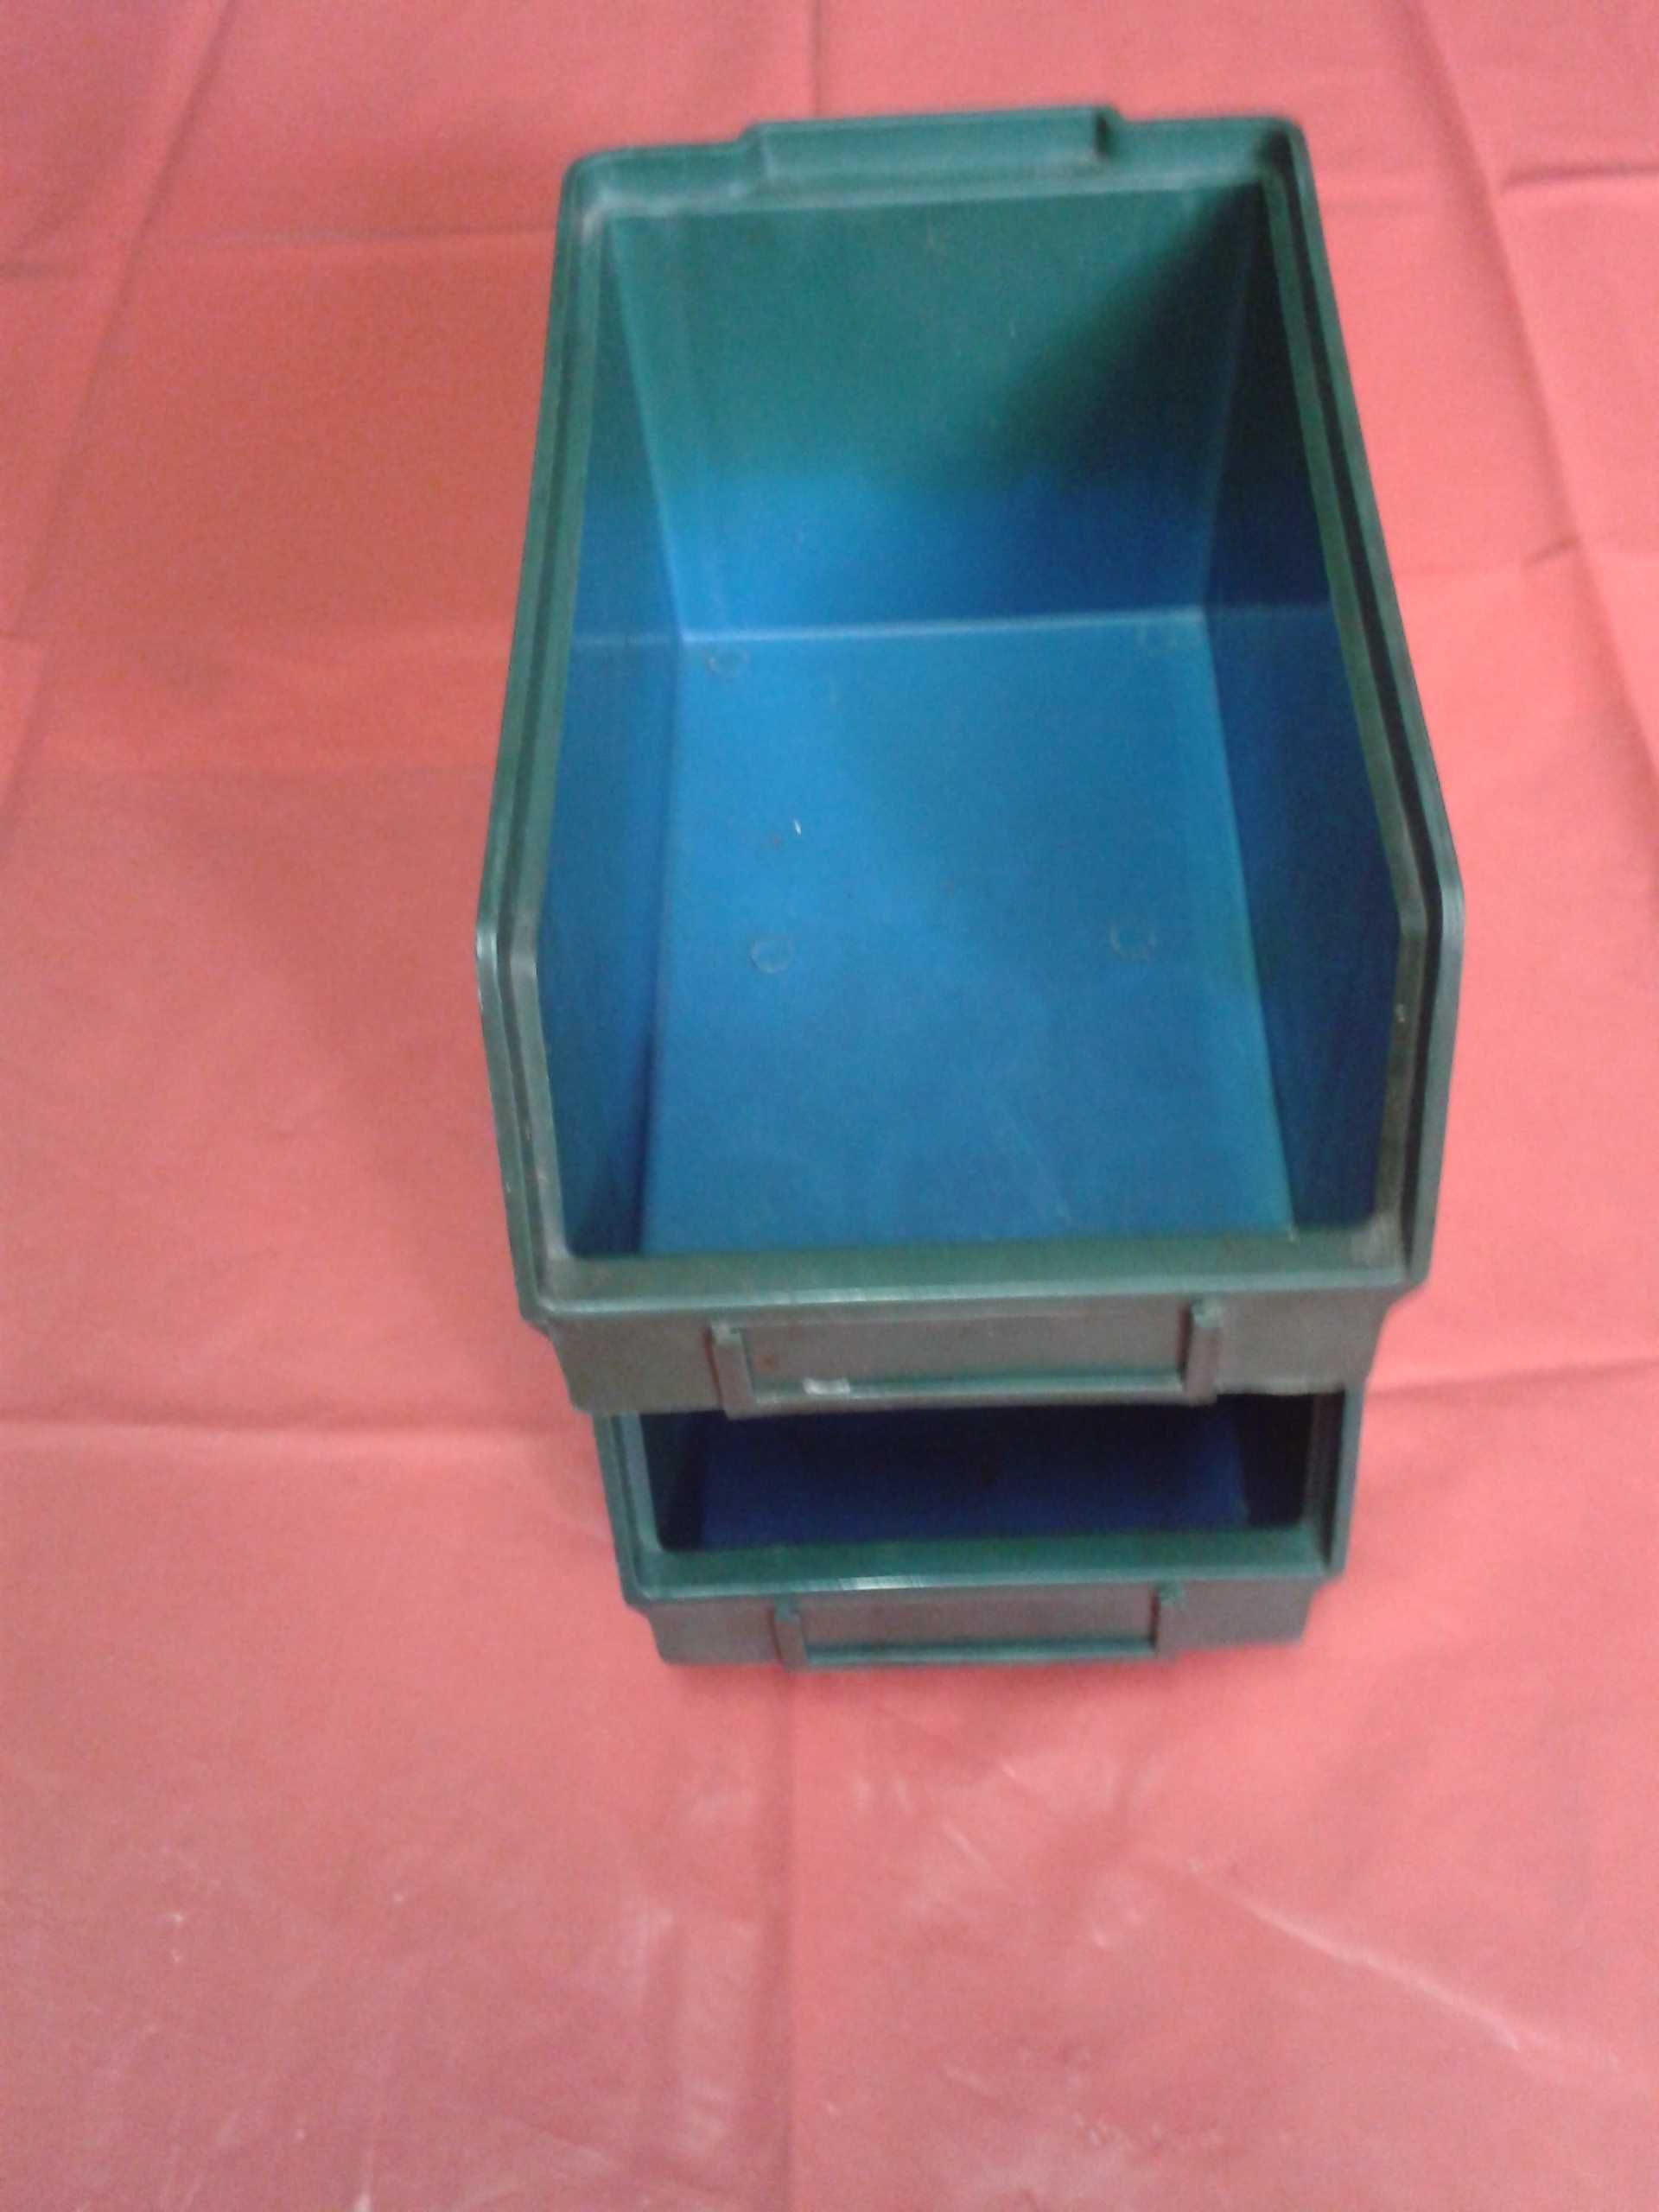 2 caixas plástic de bico,empilháveis,tipo contentor s/tampa,azuis EOFE